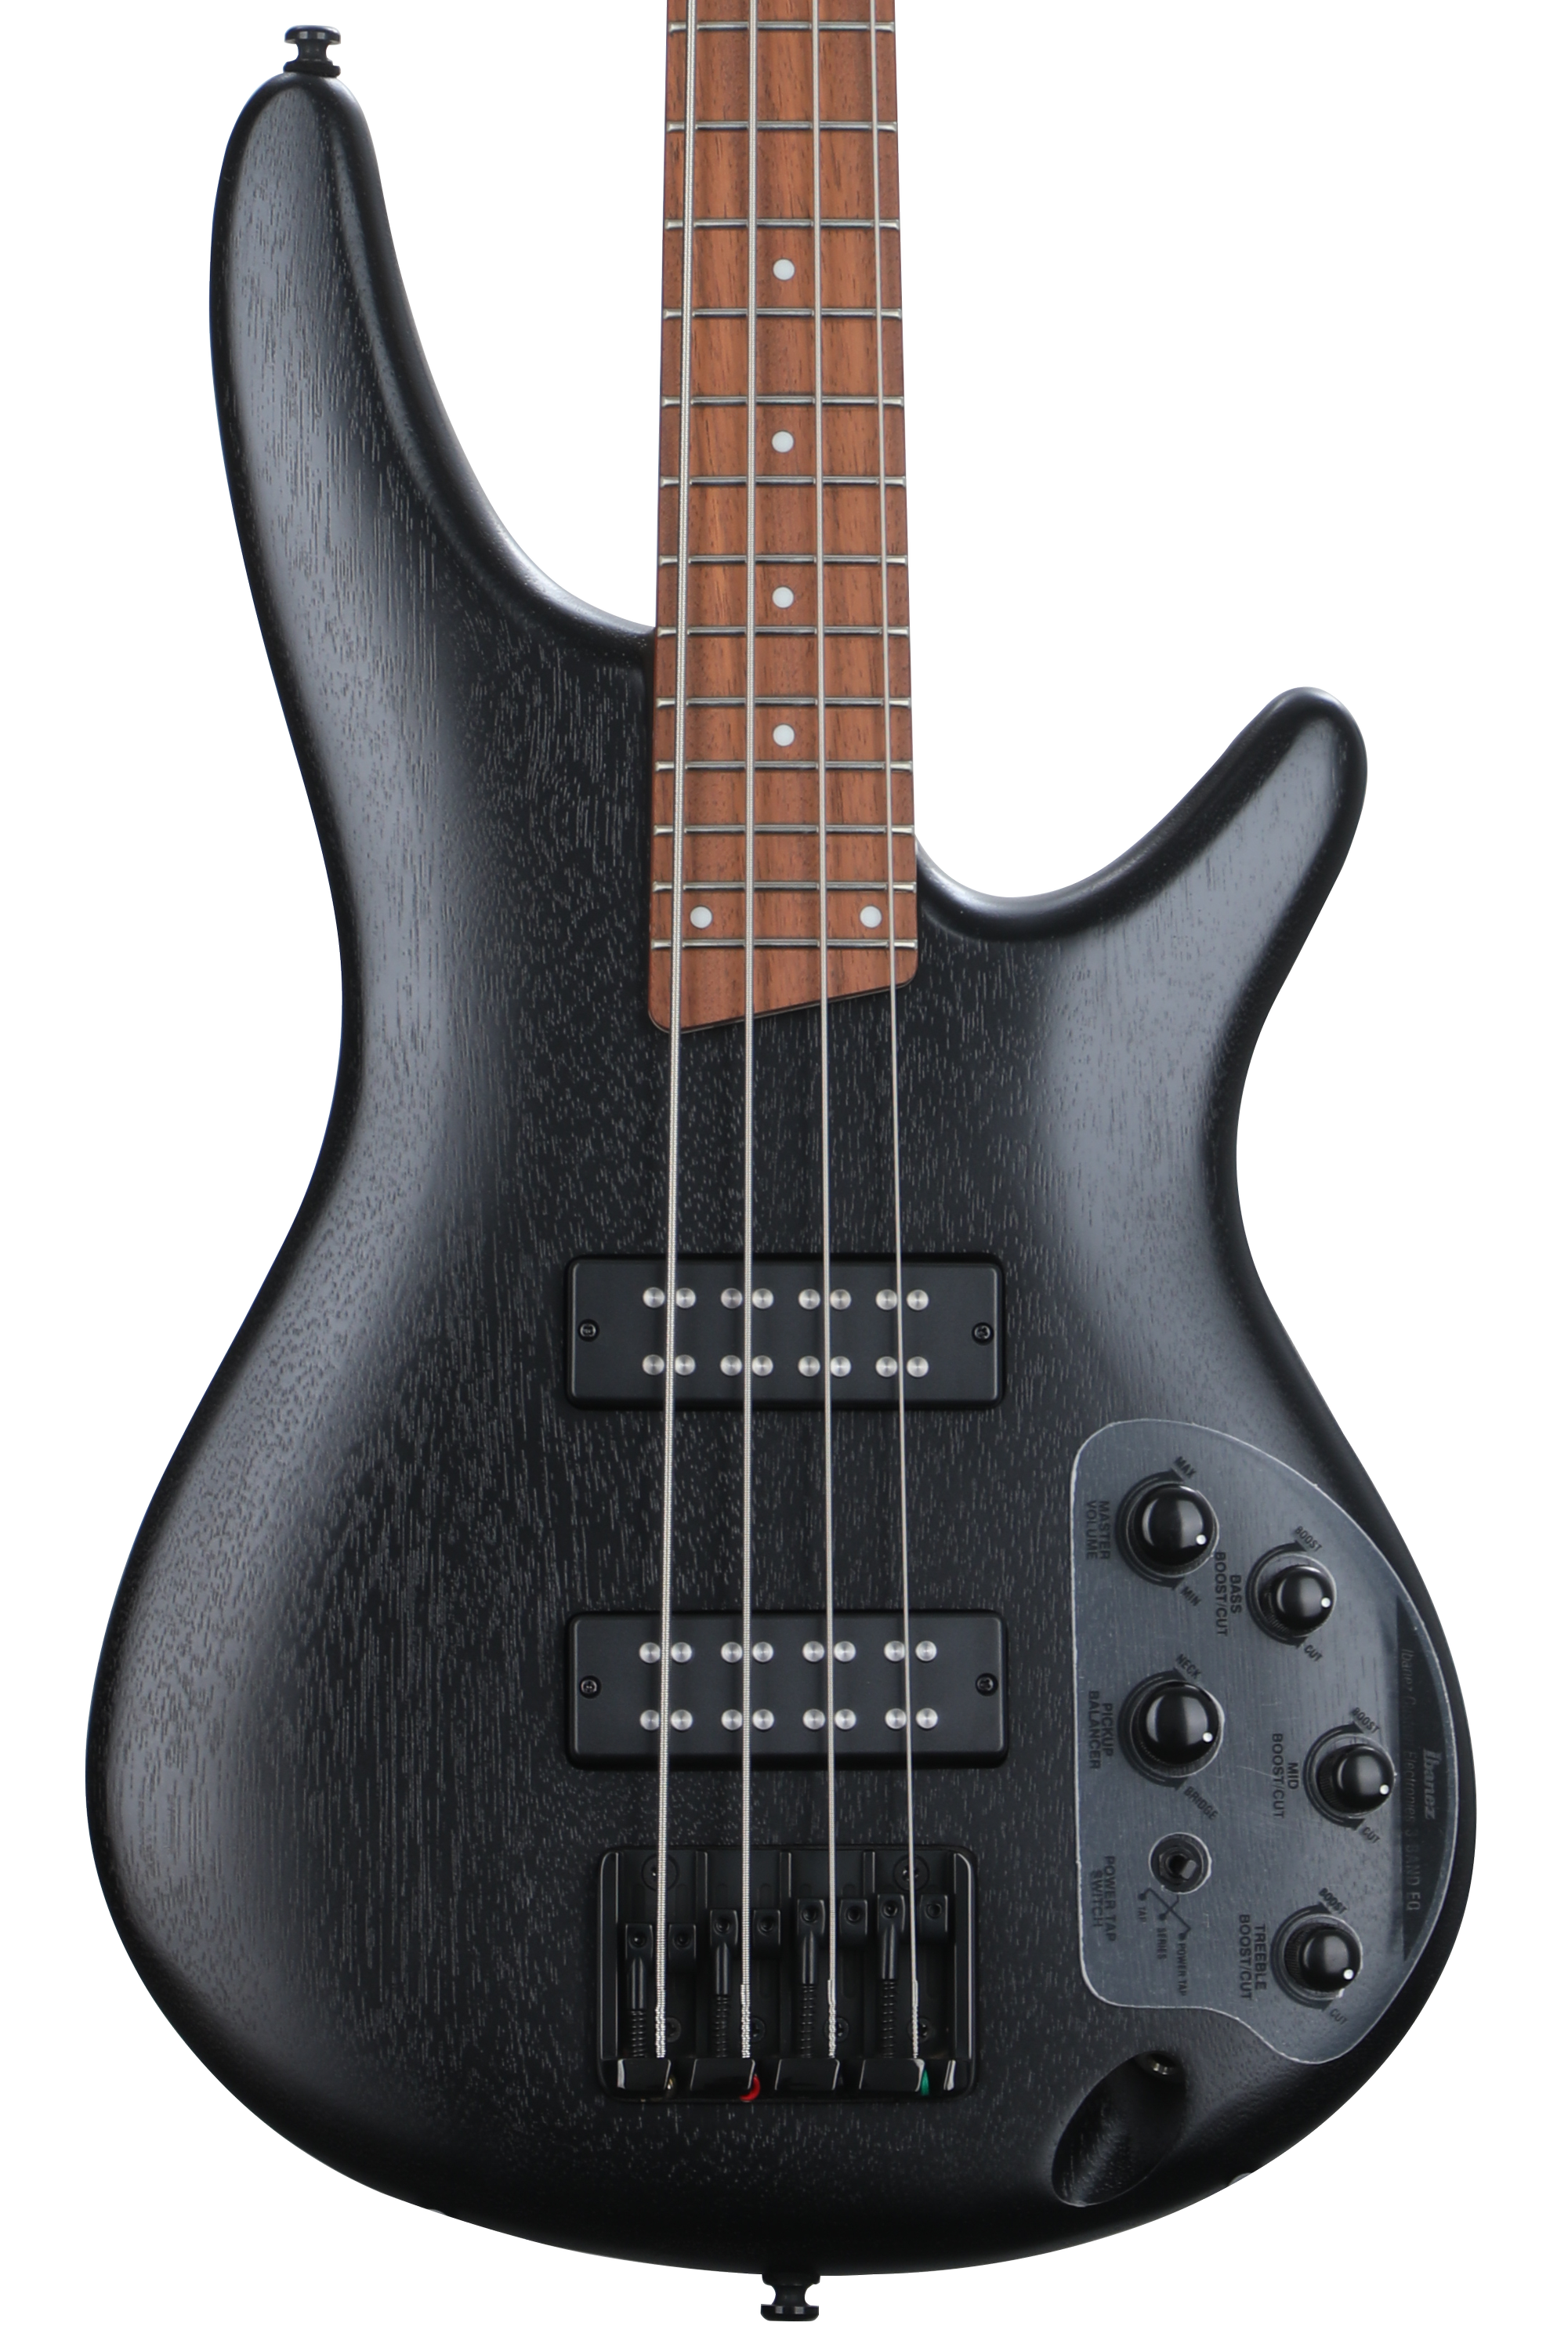 Ibanez Standard SR300EB Bass Guitar - Weathered Black